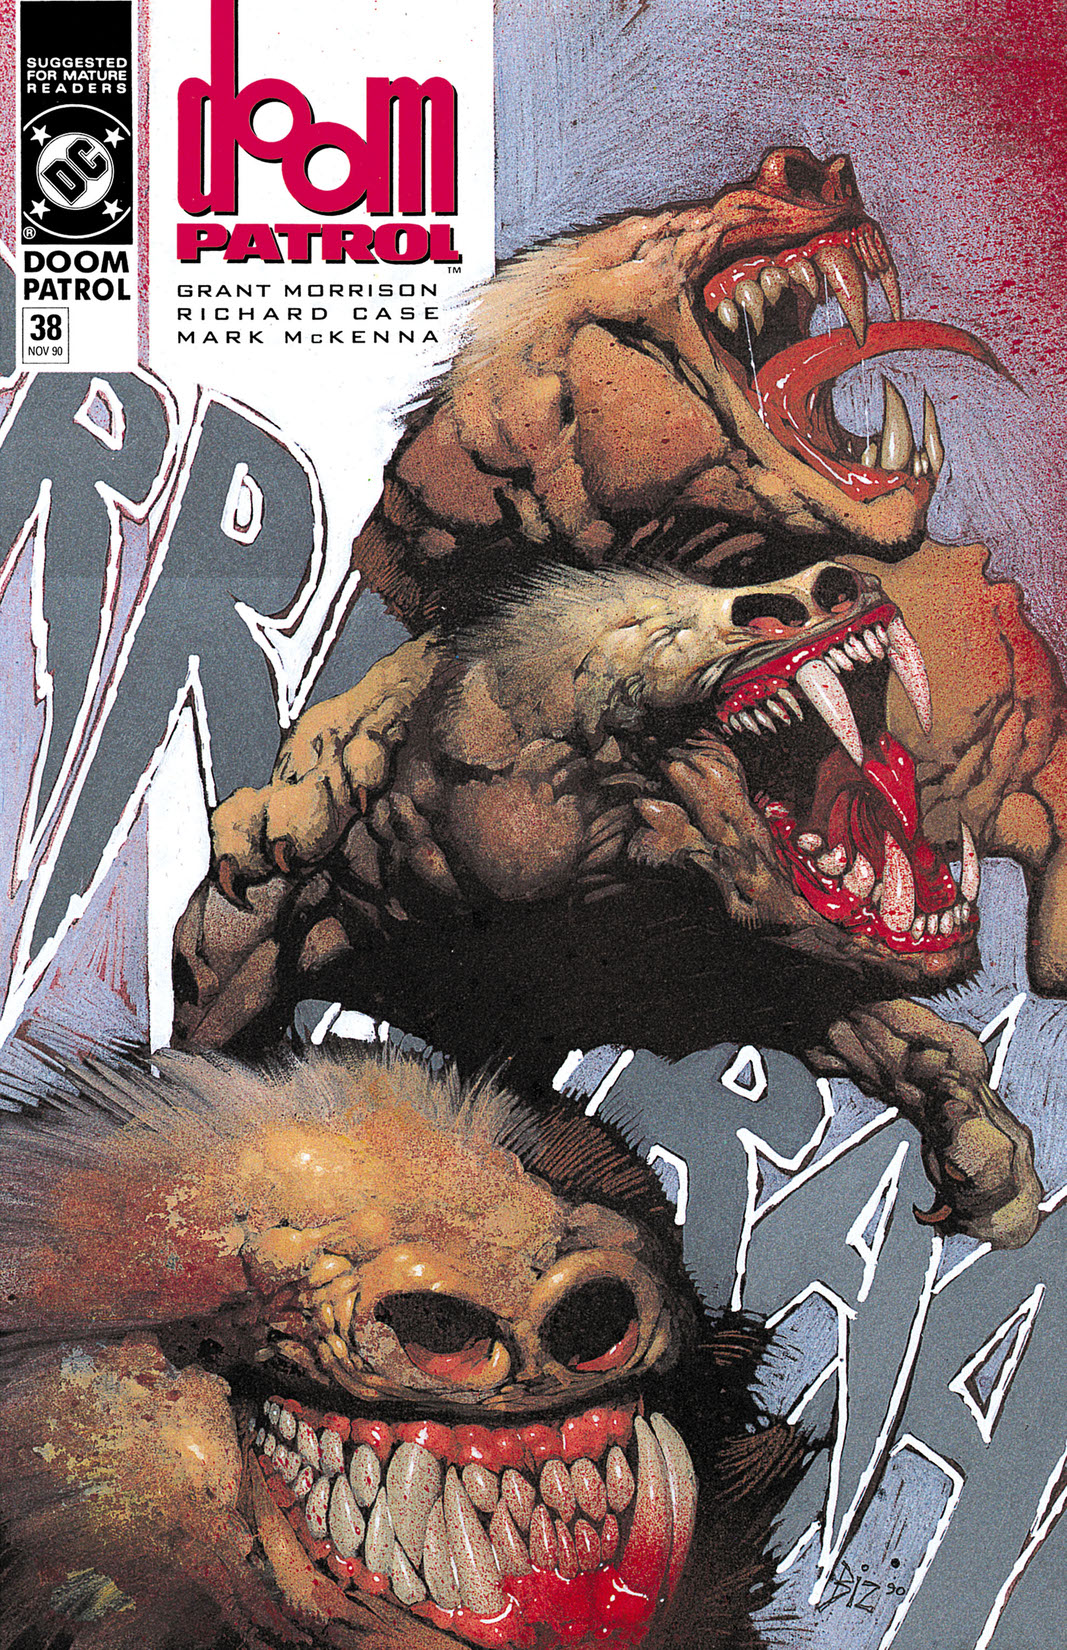 Doom Patrol (1987-) #38 preview images